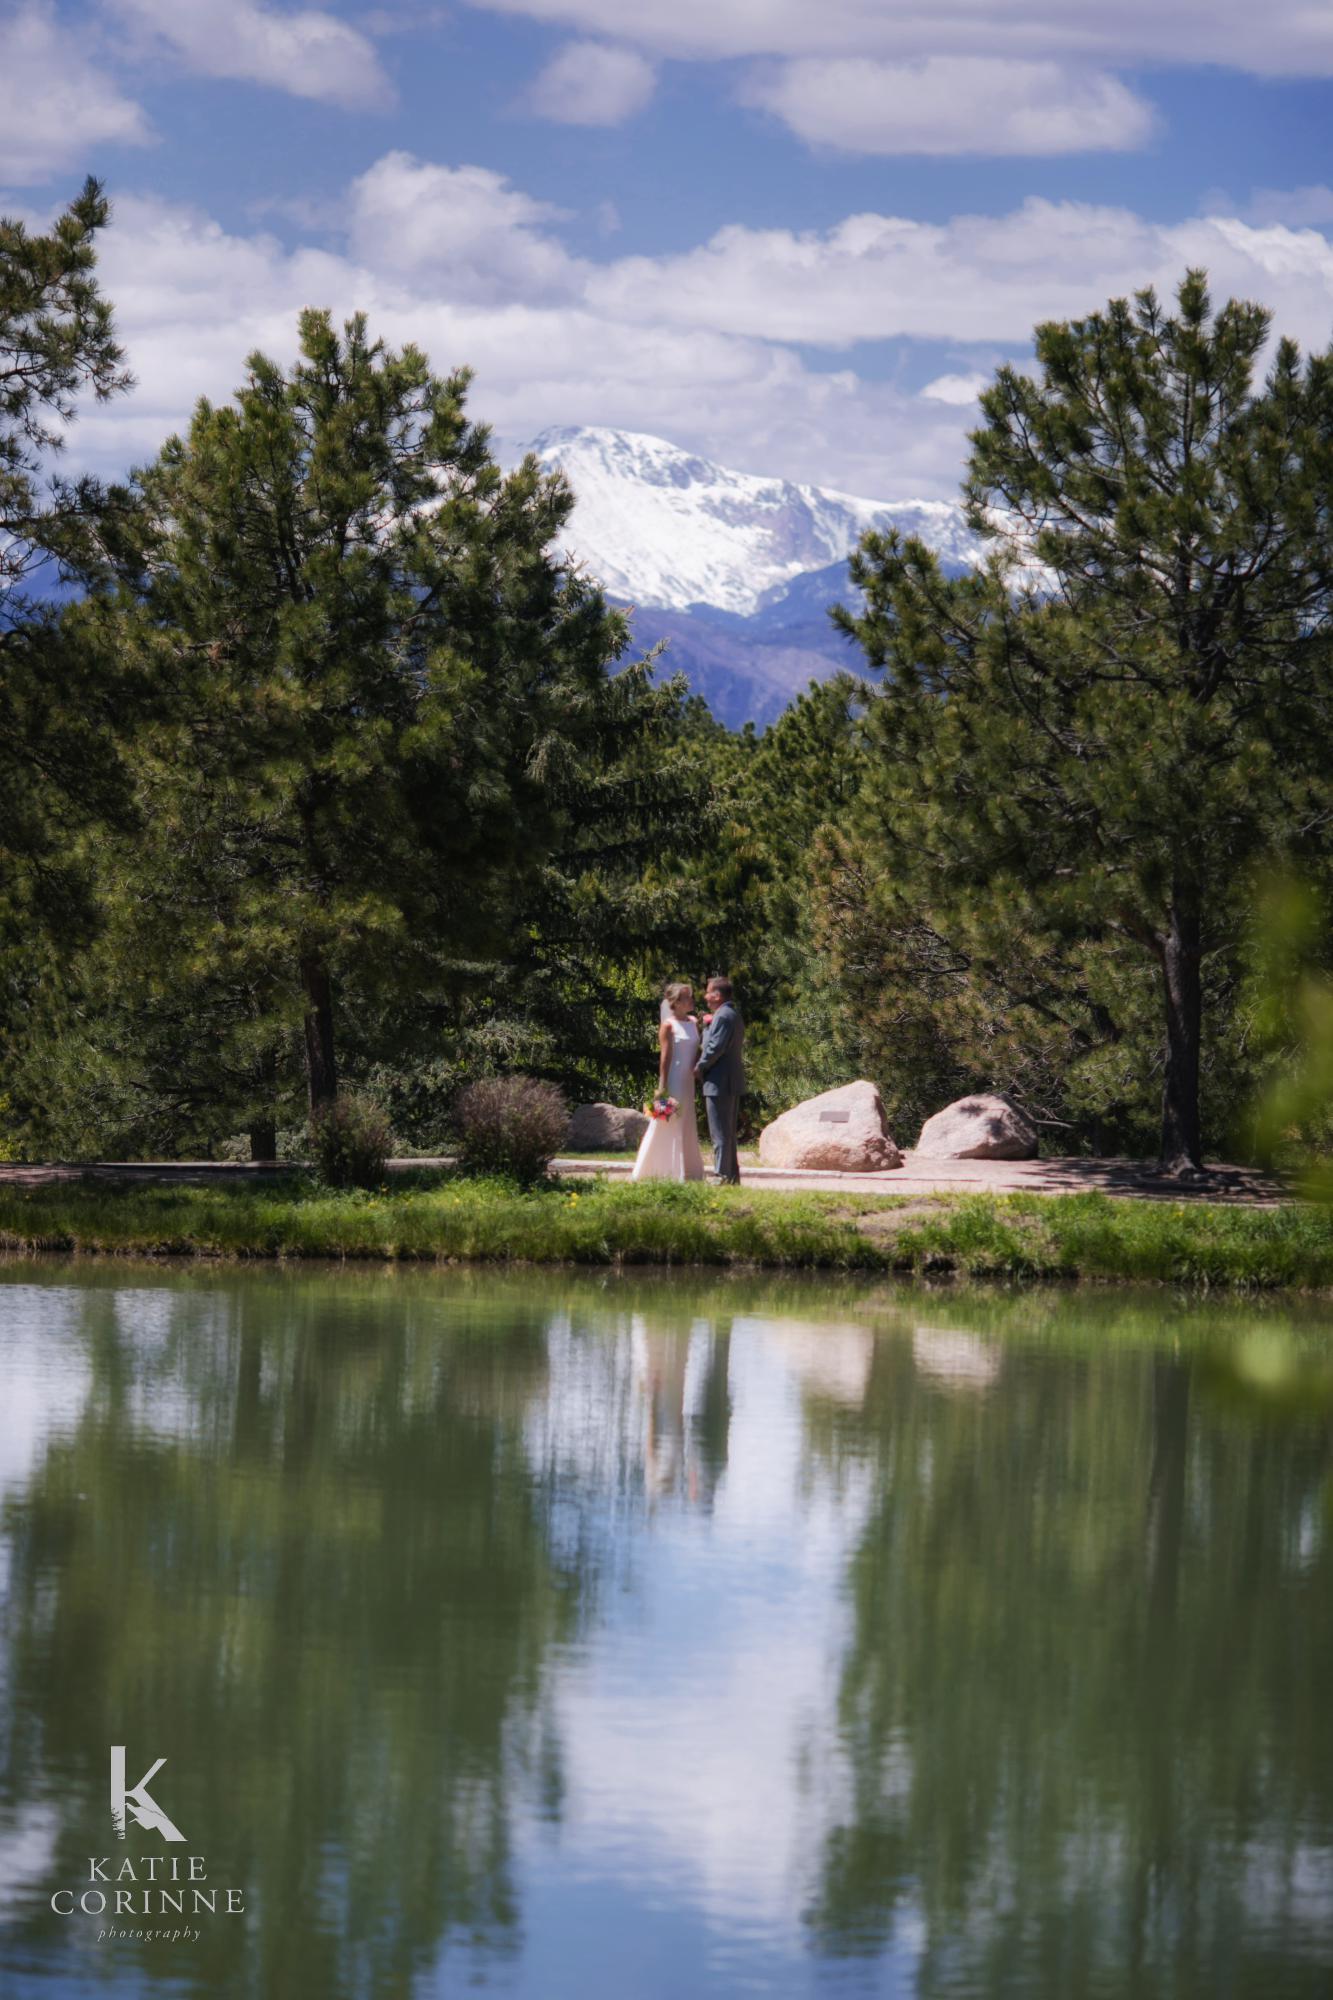 Mountain View, Fox Run Wedding Gazebo photo by Katie Corinne, a great outdoor wedding venue.